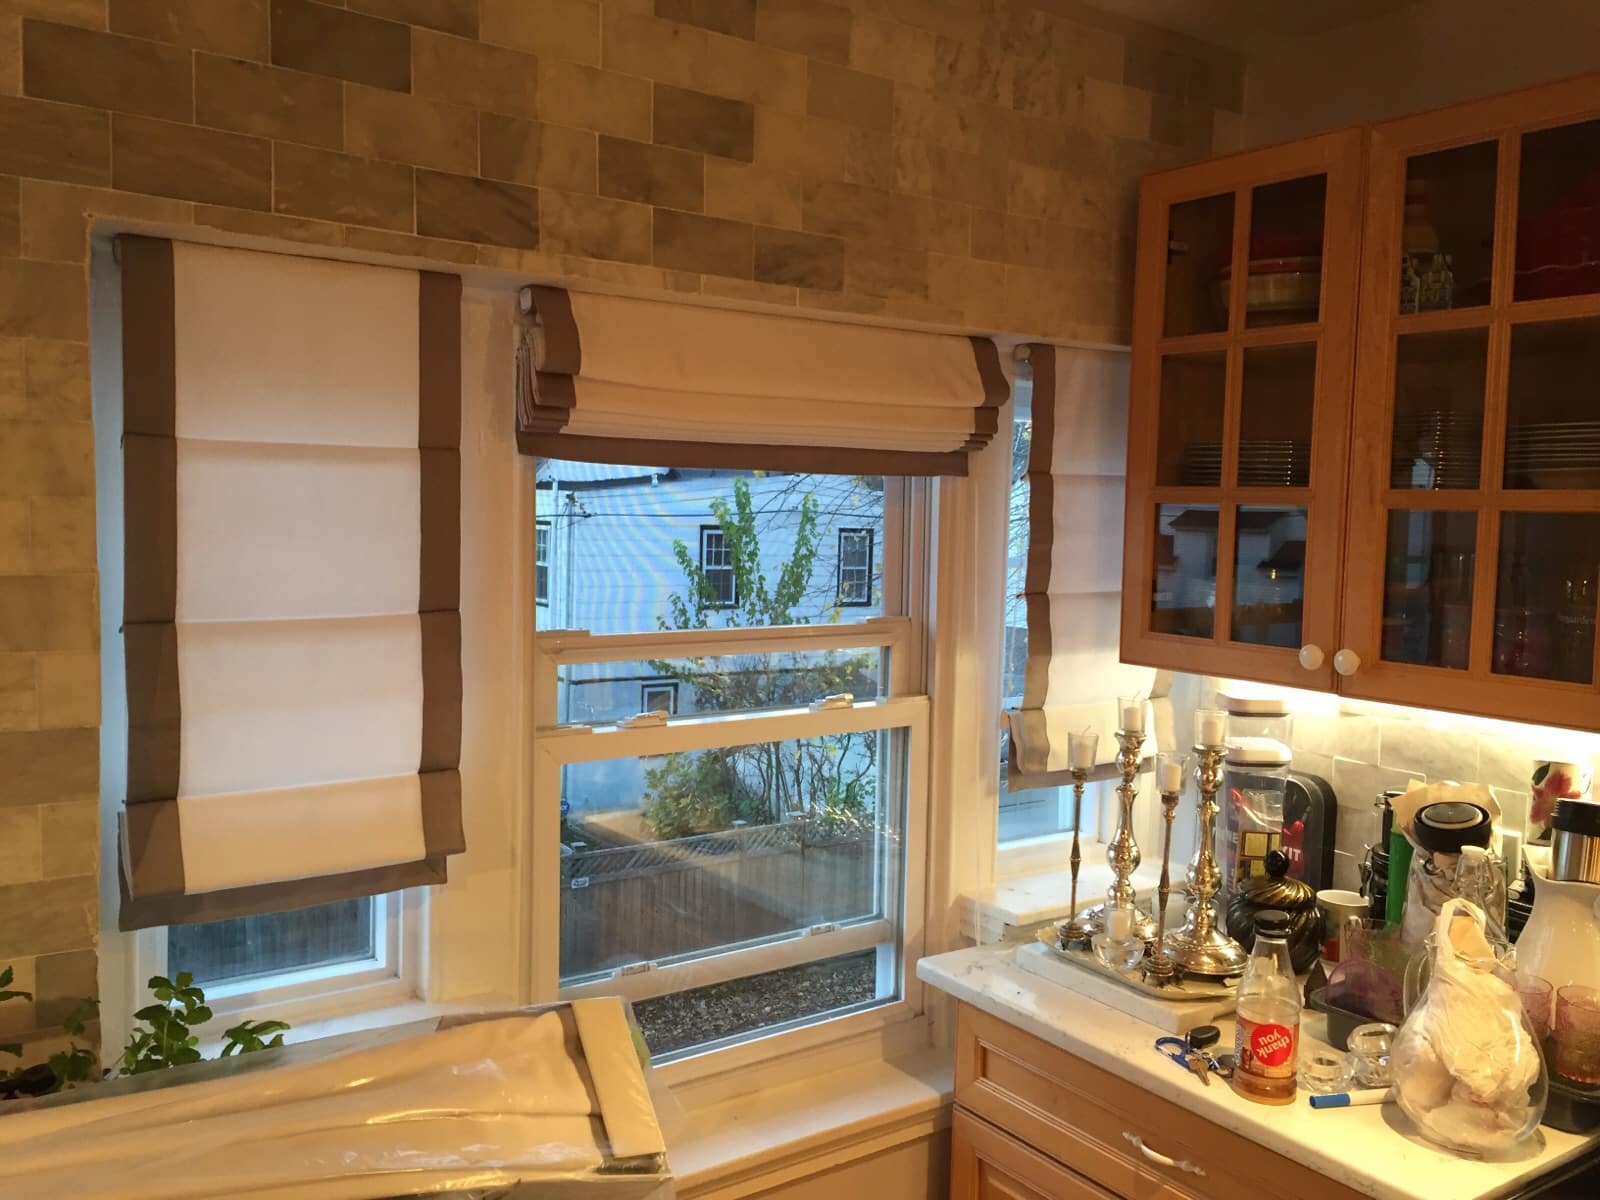 best window treatment for kitchen sink window